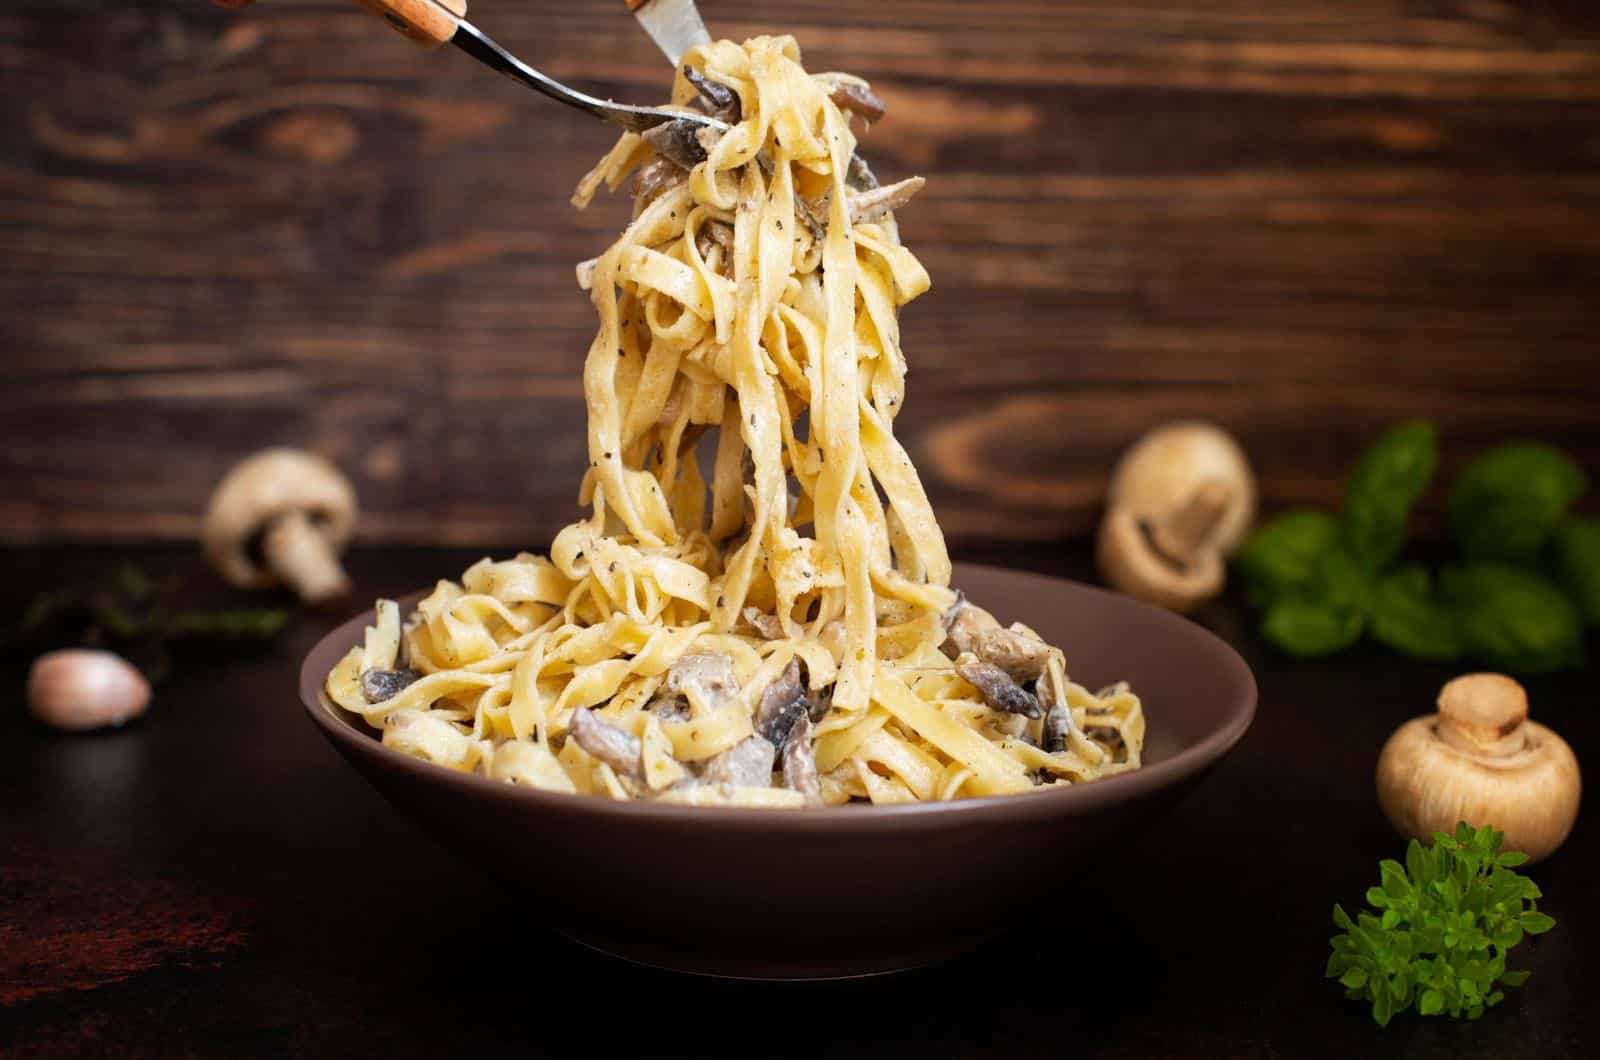 Homemade Italian fettuccine pasta with mushrooms and cream sauce